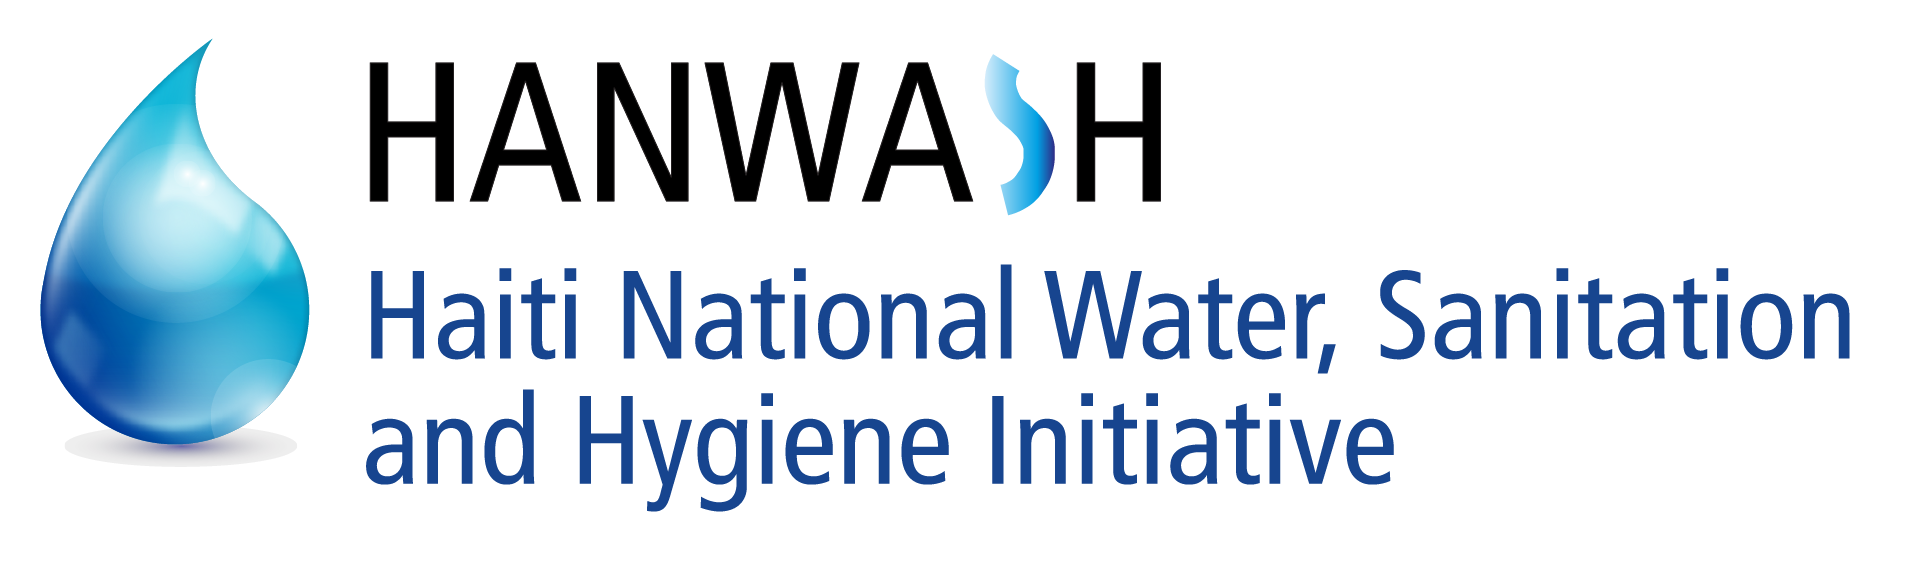 HANWASH logo